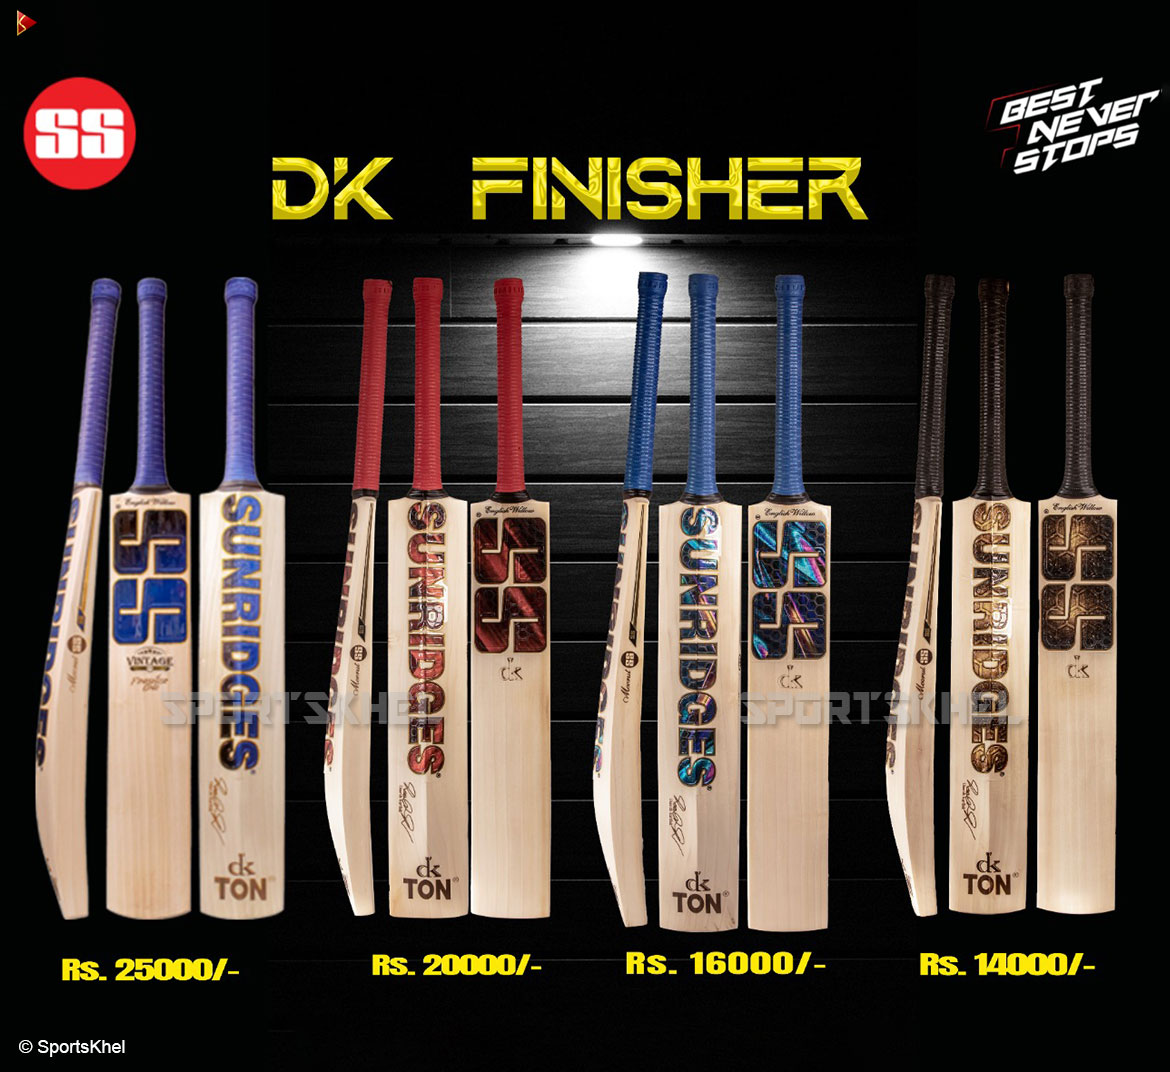 SS DK Finisher 3 Bat Features